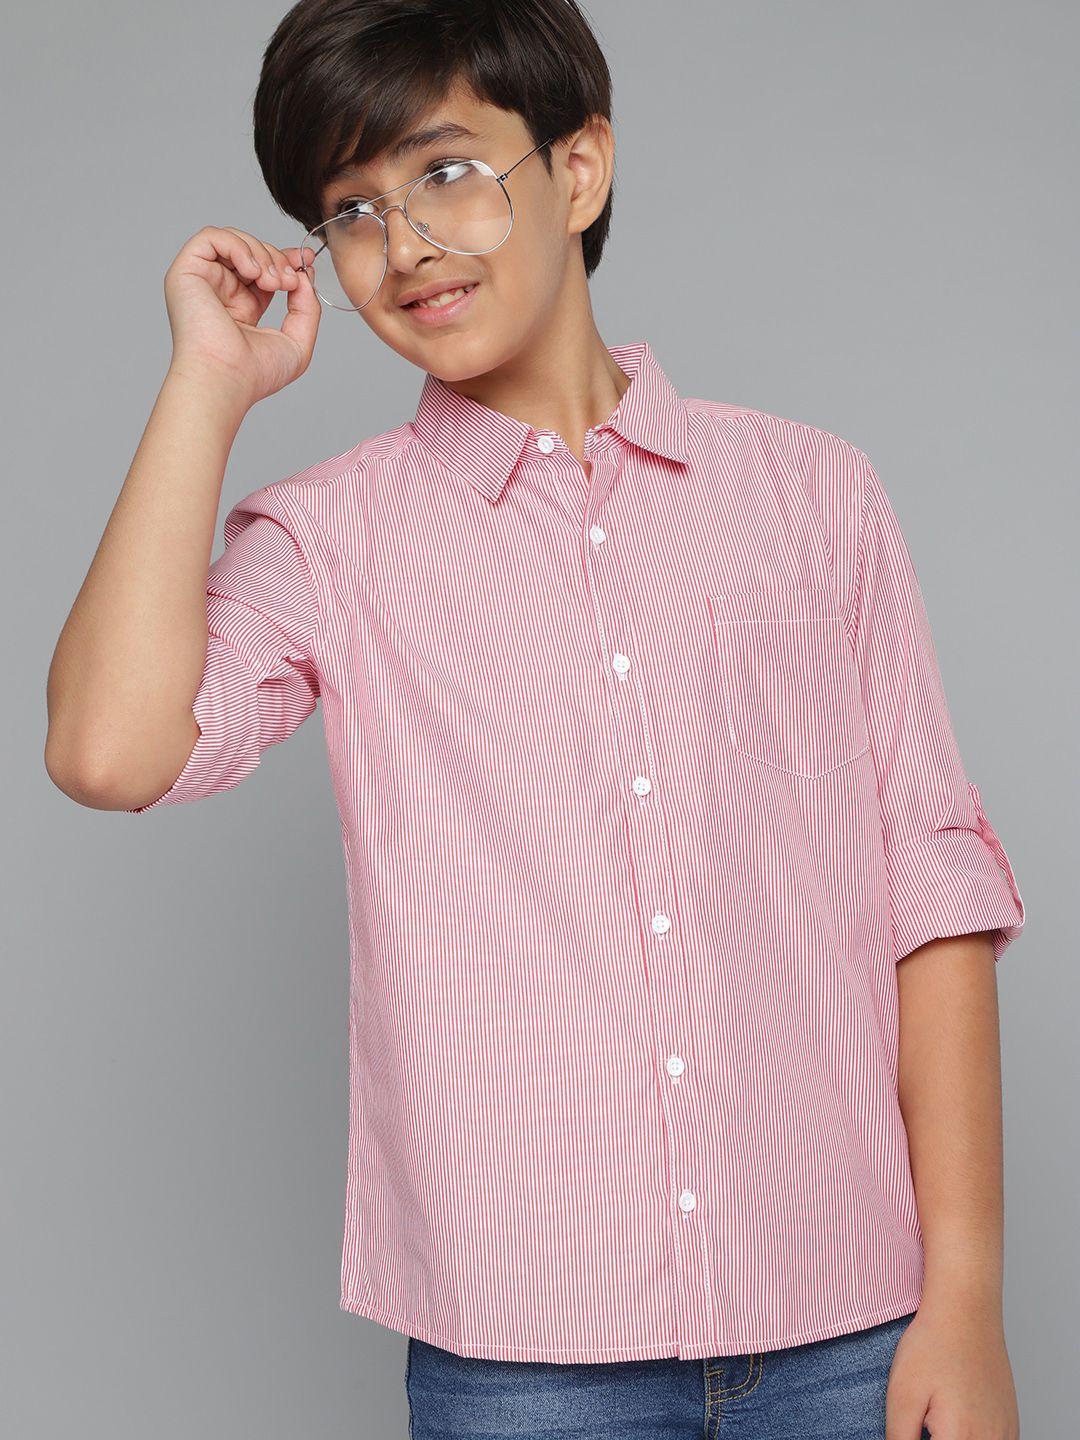 yk boys pink & white pinstriped casual shirt